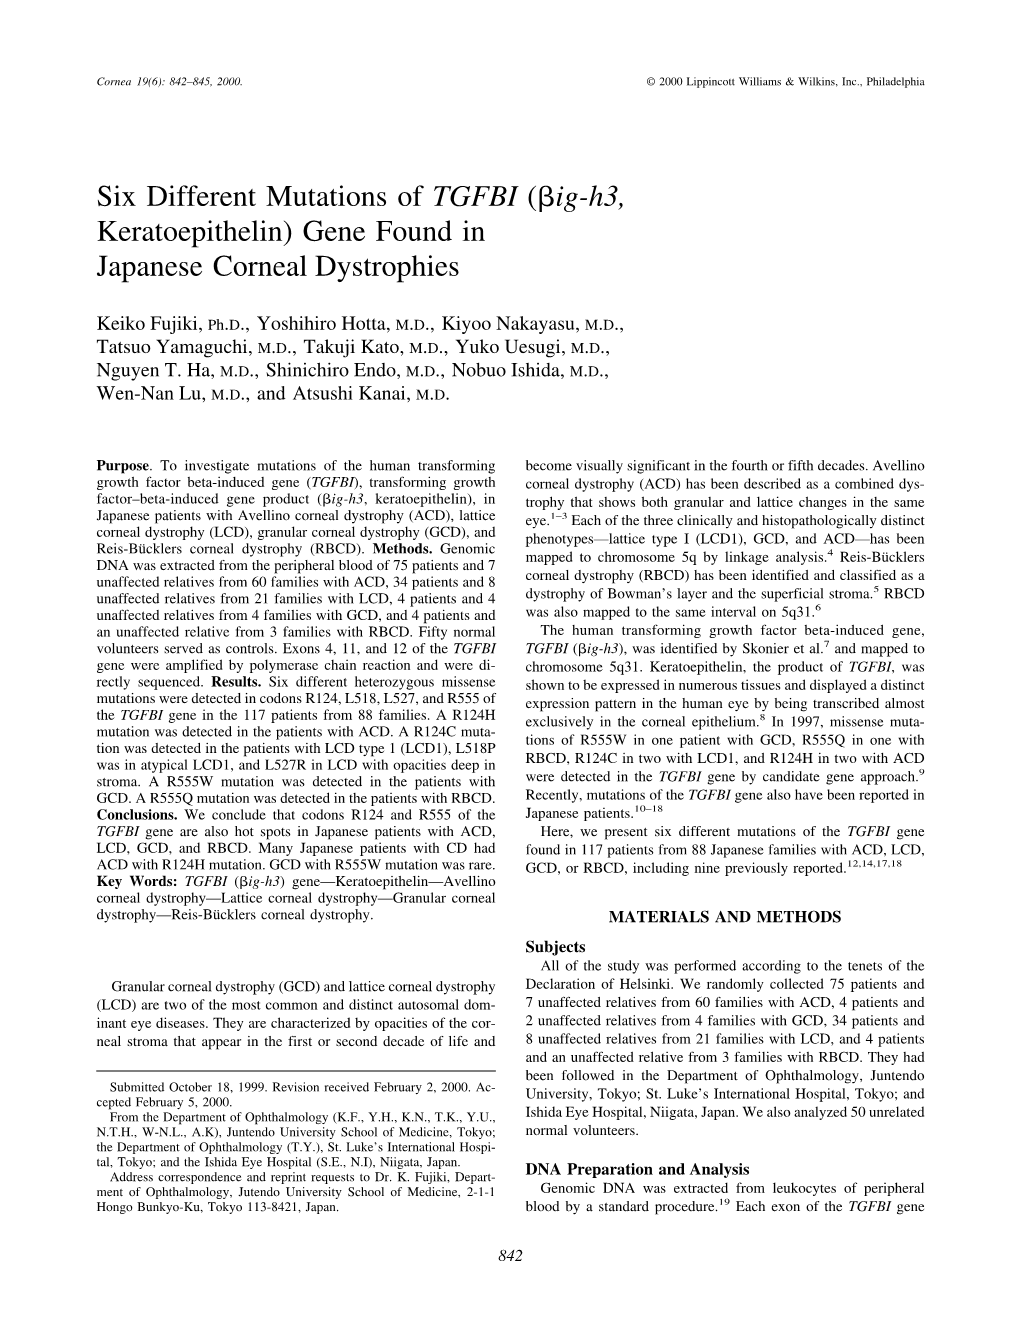 Six Different Mutations of TGFBI (ßig-H3, Keratoepithelin) Gene